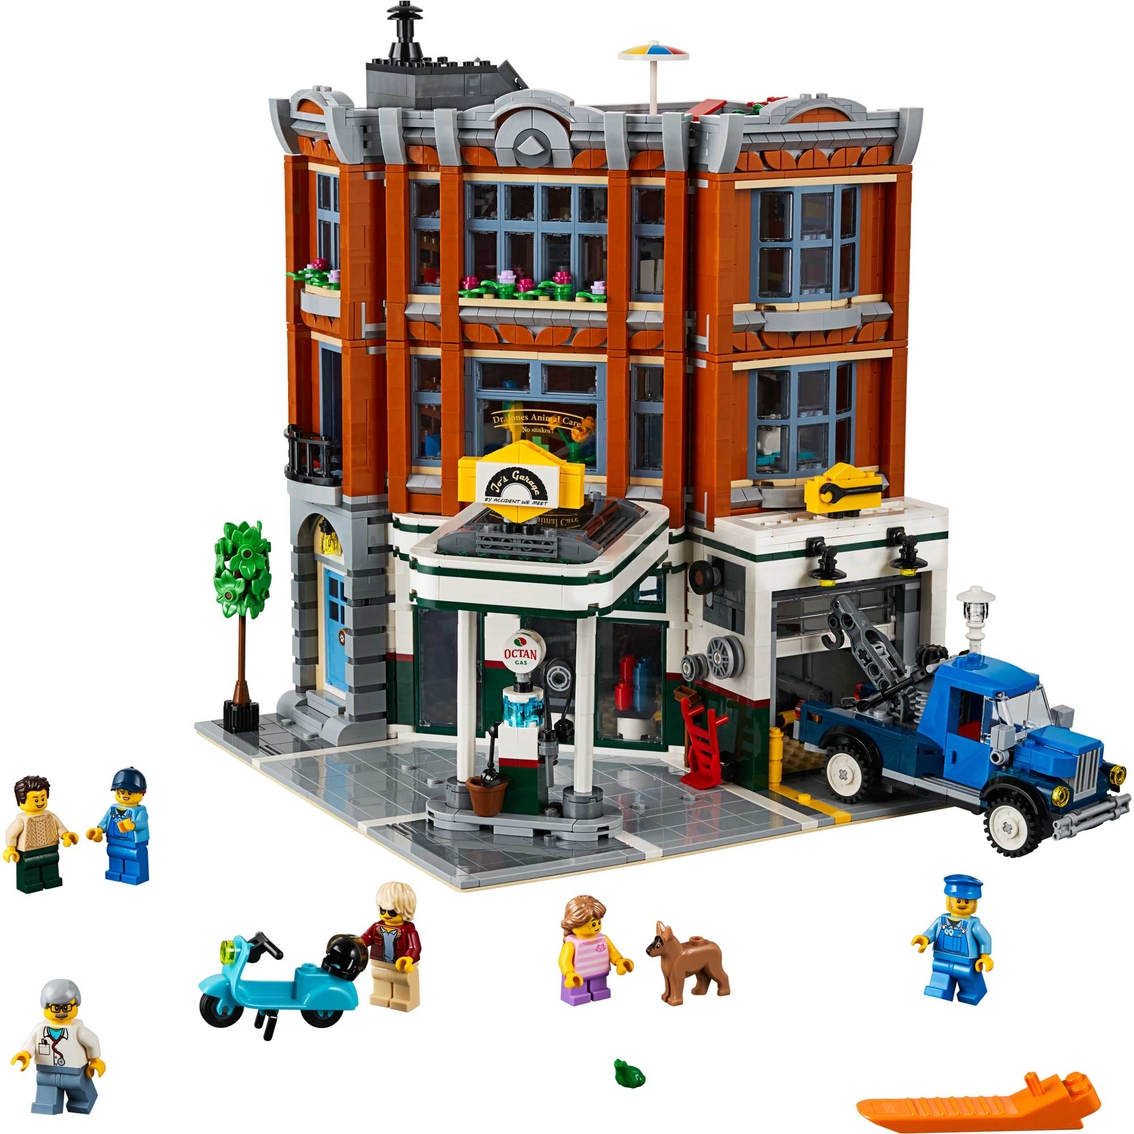 LEGO Expert Corner Garage Playset - Image 3 of 3